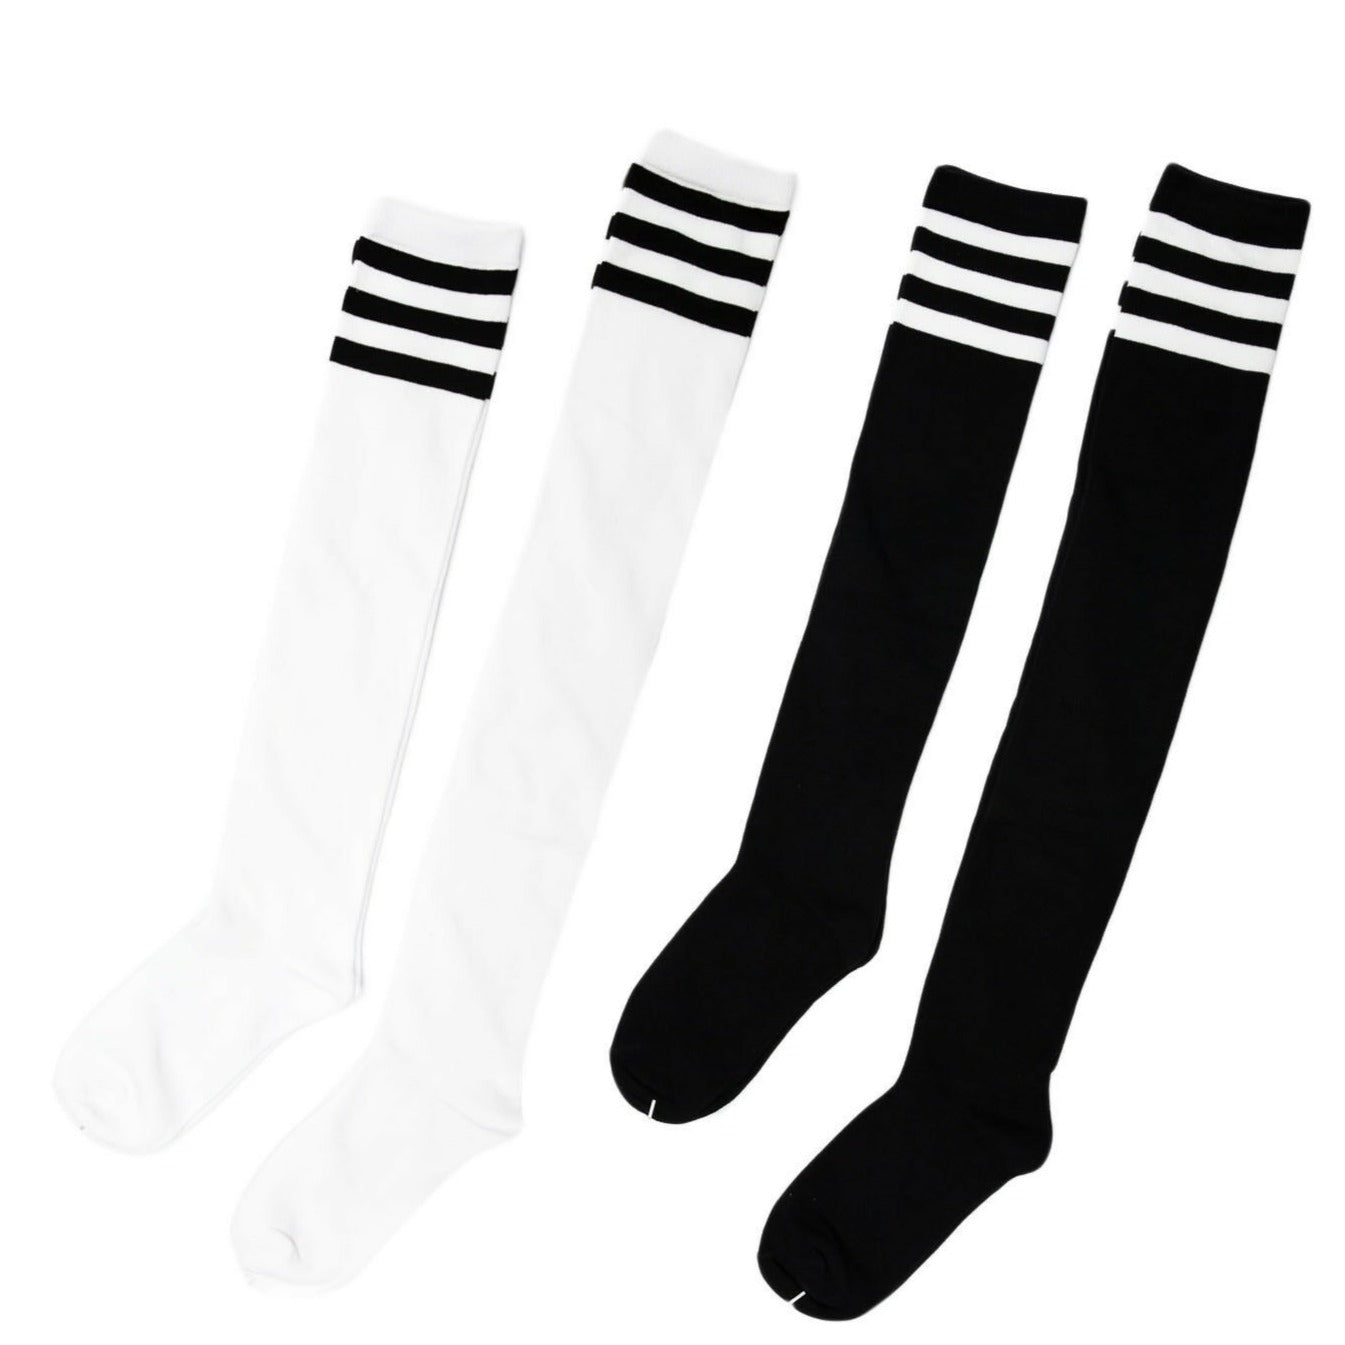 White Stripes Thigh High Socks, Black Thigh Socks